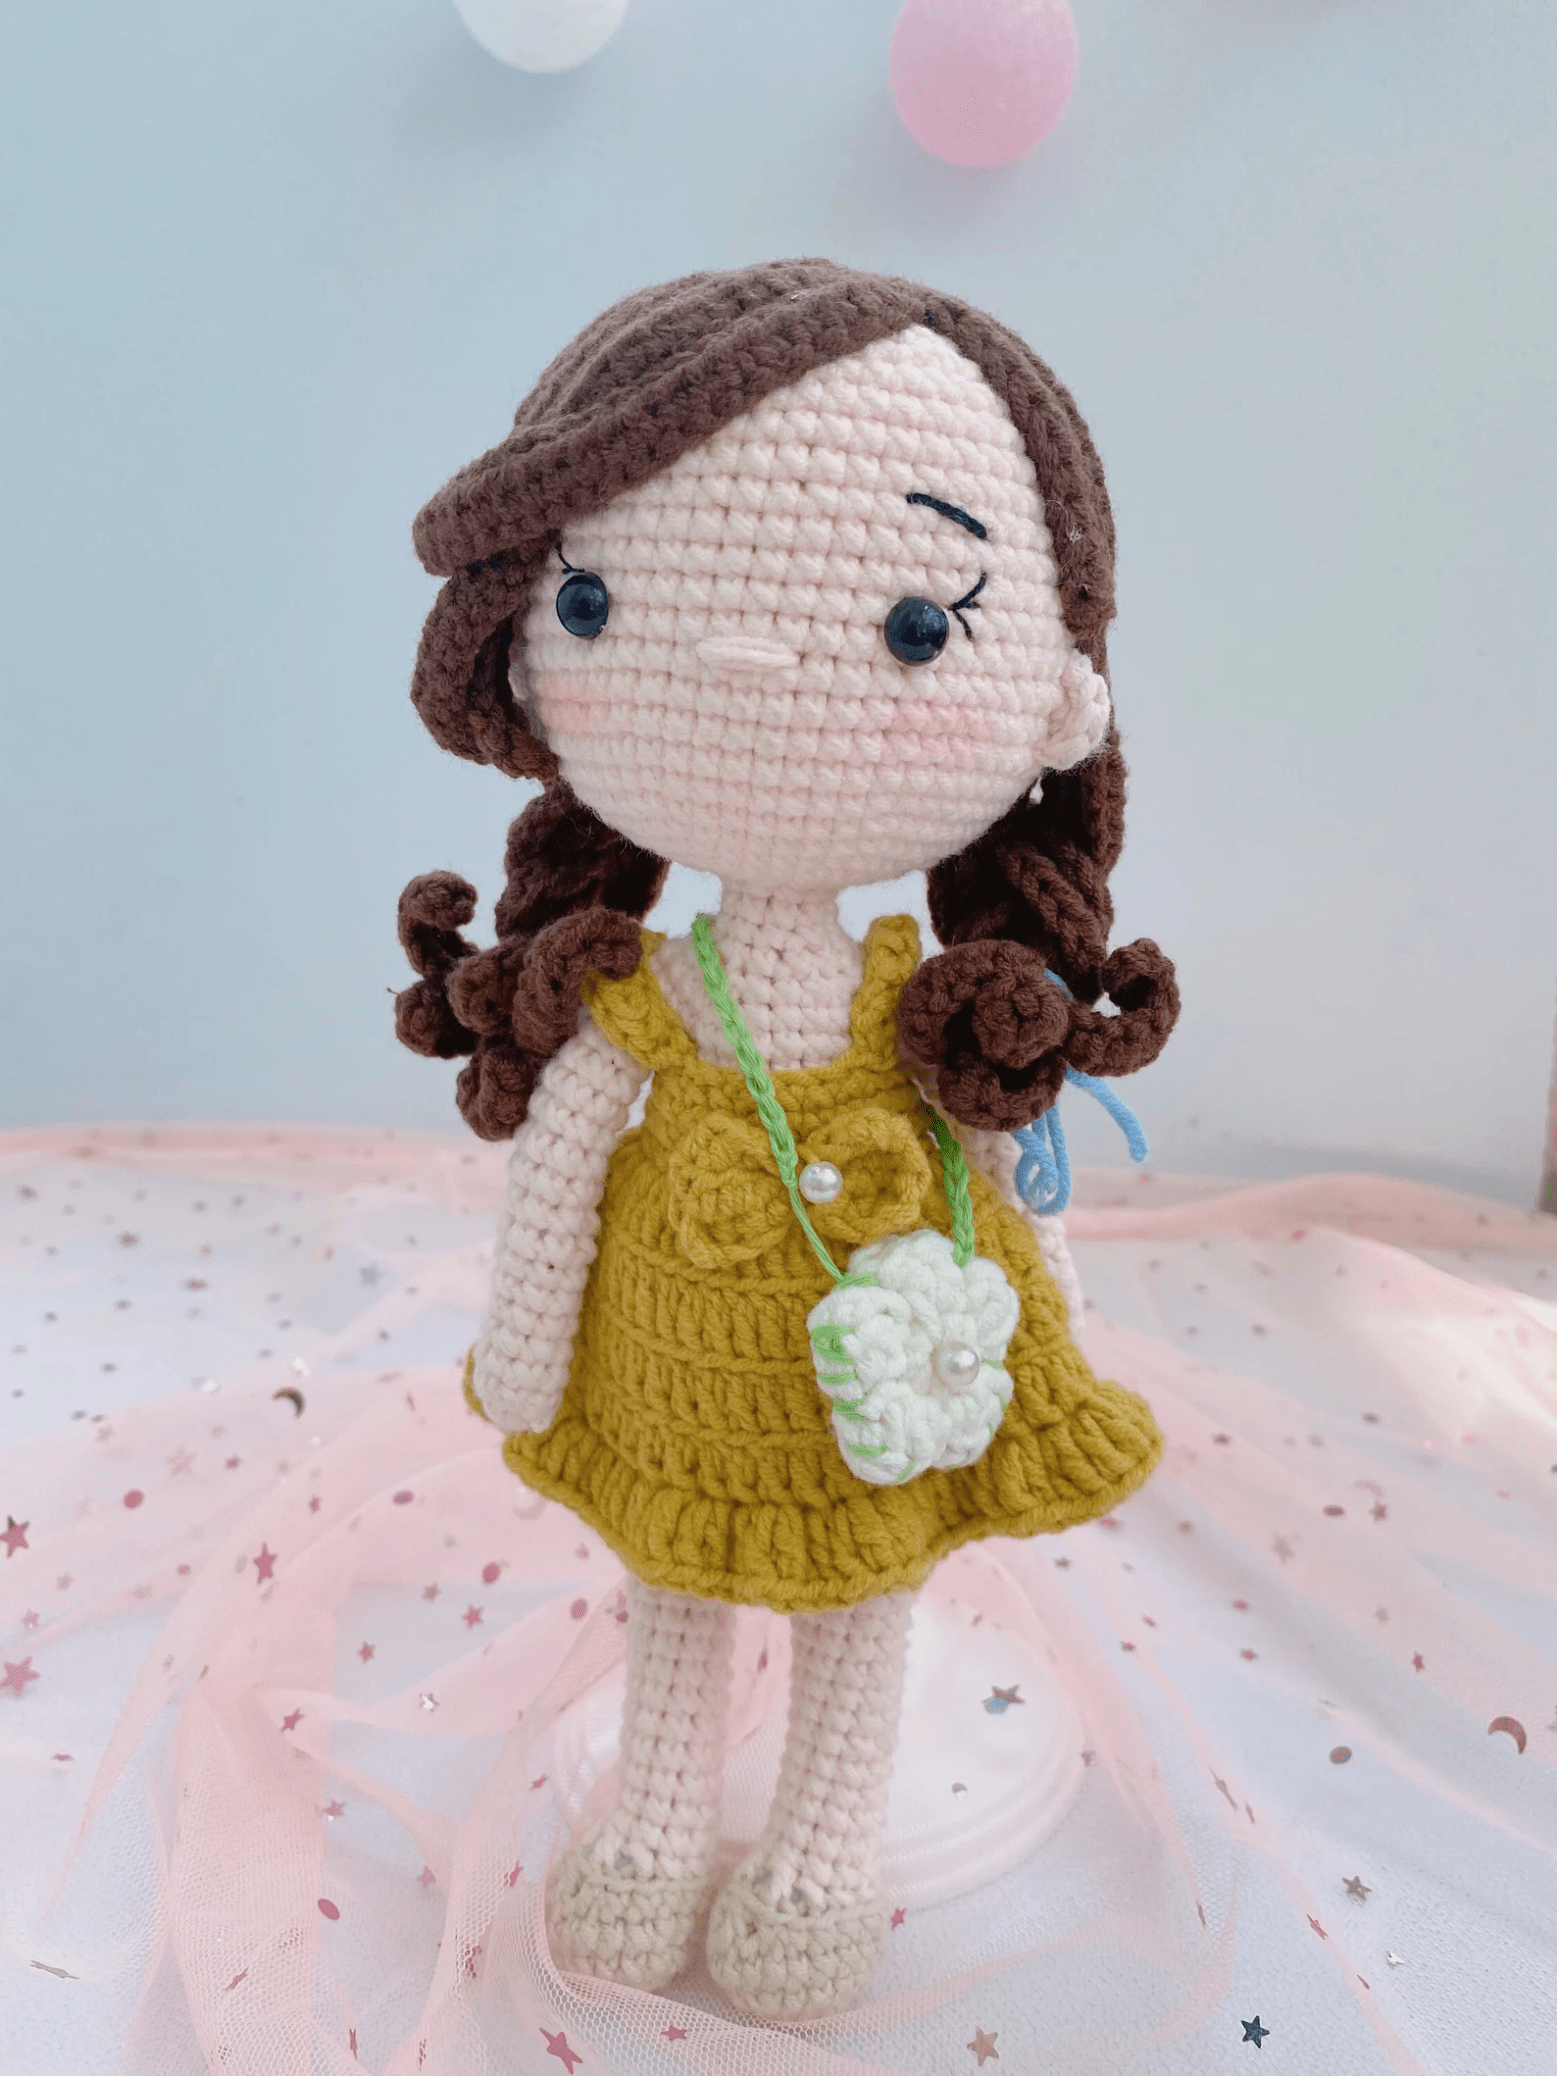 Emily the Enchanting Crochet Doll